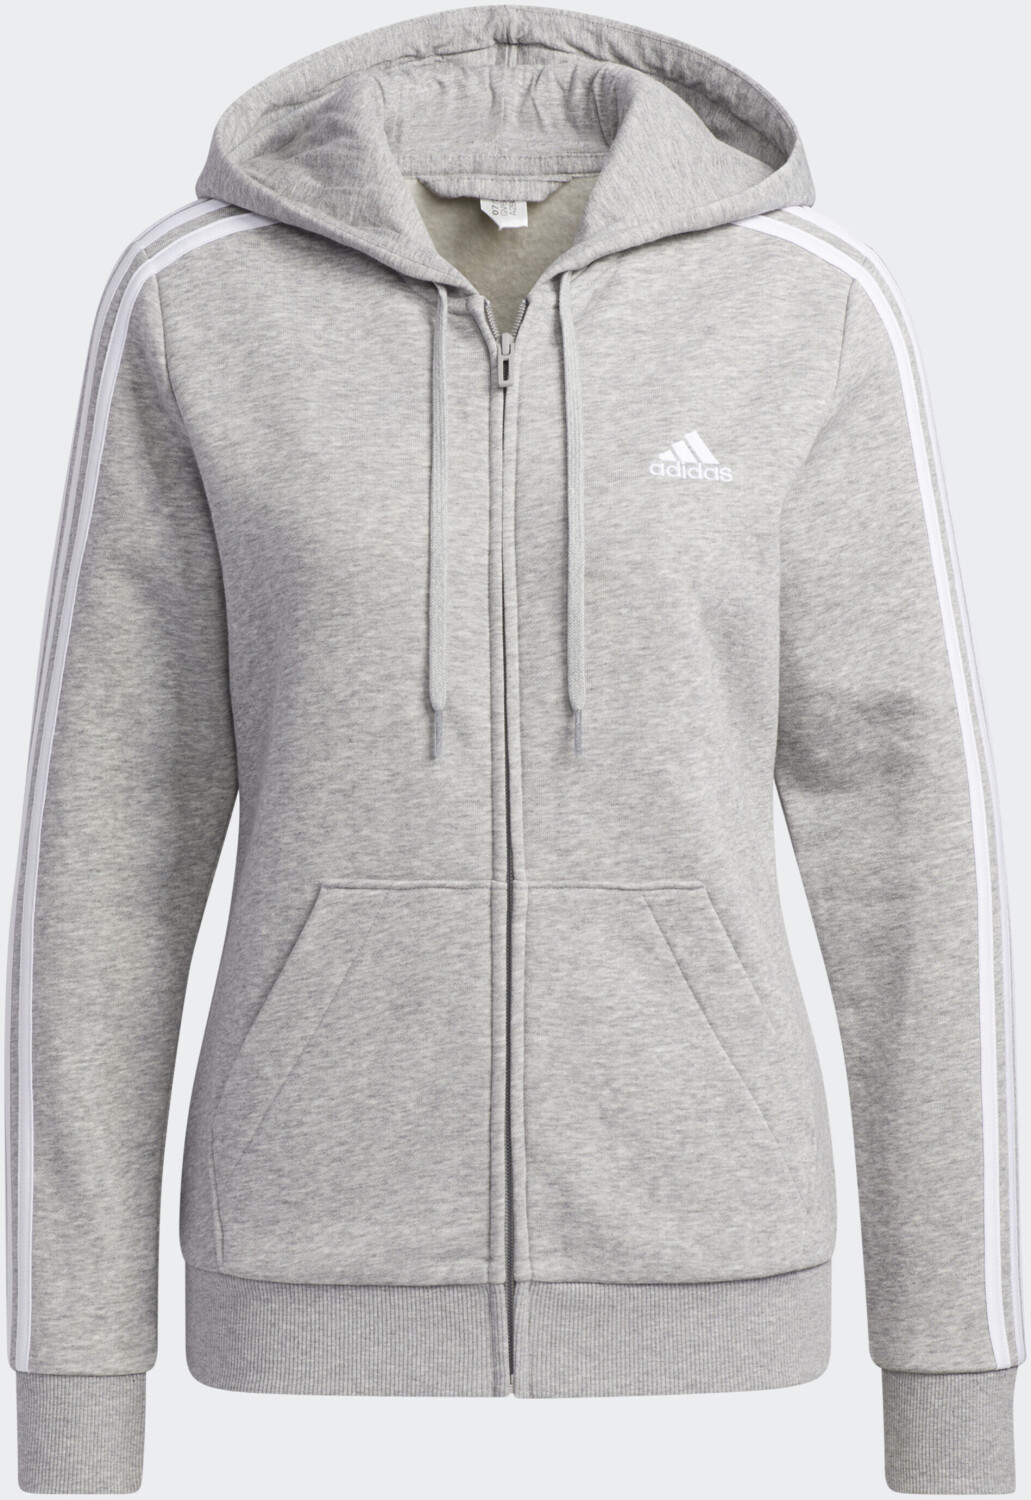 | heather/white bei Preisvergleich grey Essentials ab 30,00 3-Streifen Kapuzenjacke € Fleece Adidas medium